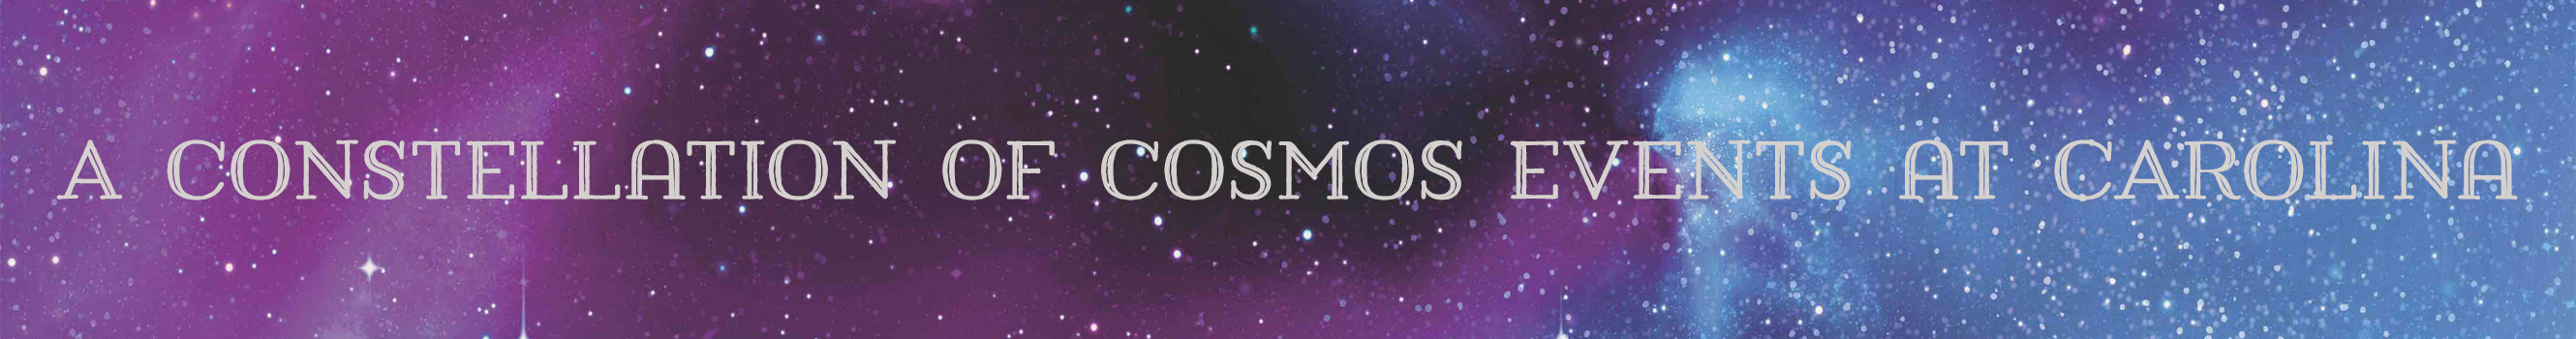 A Constellation of Cosmos Events at Carolina